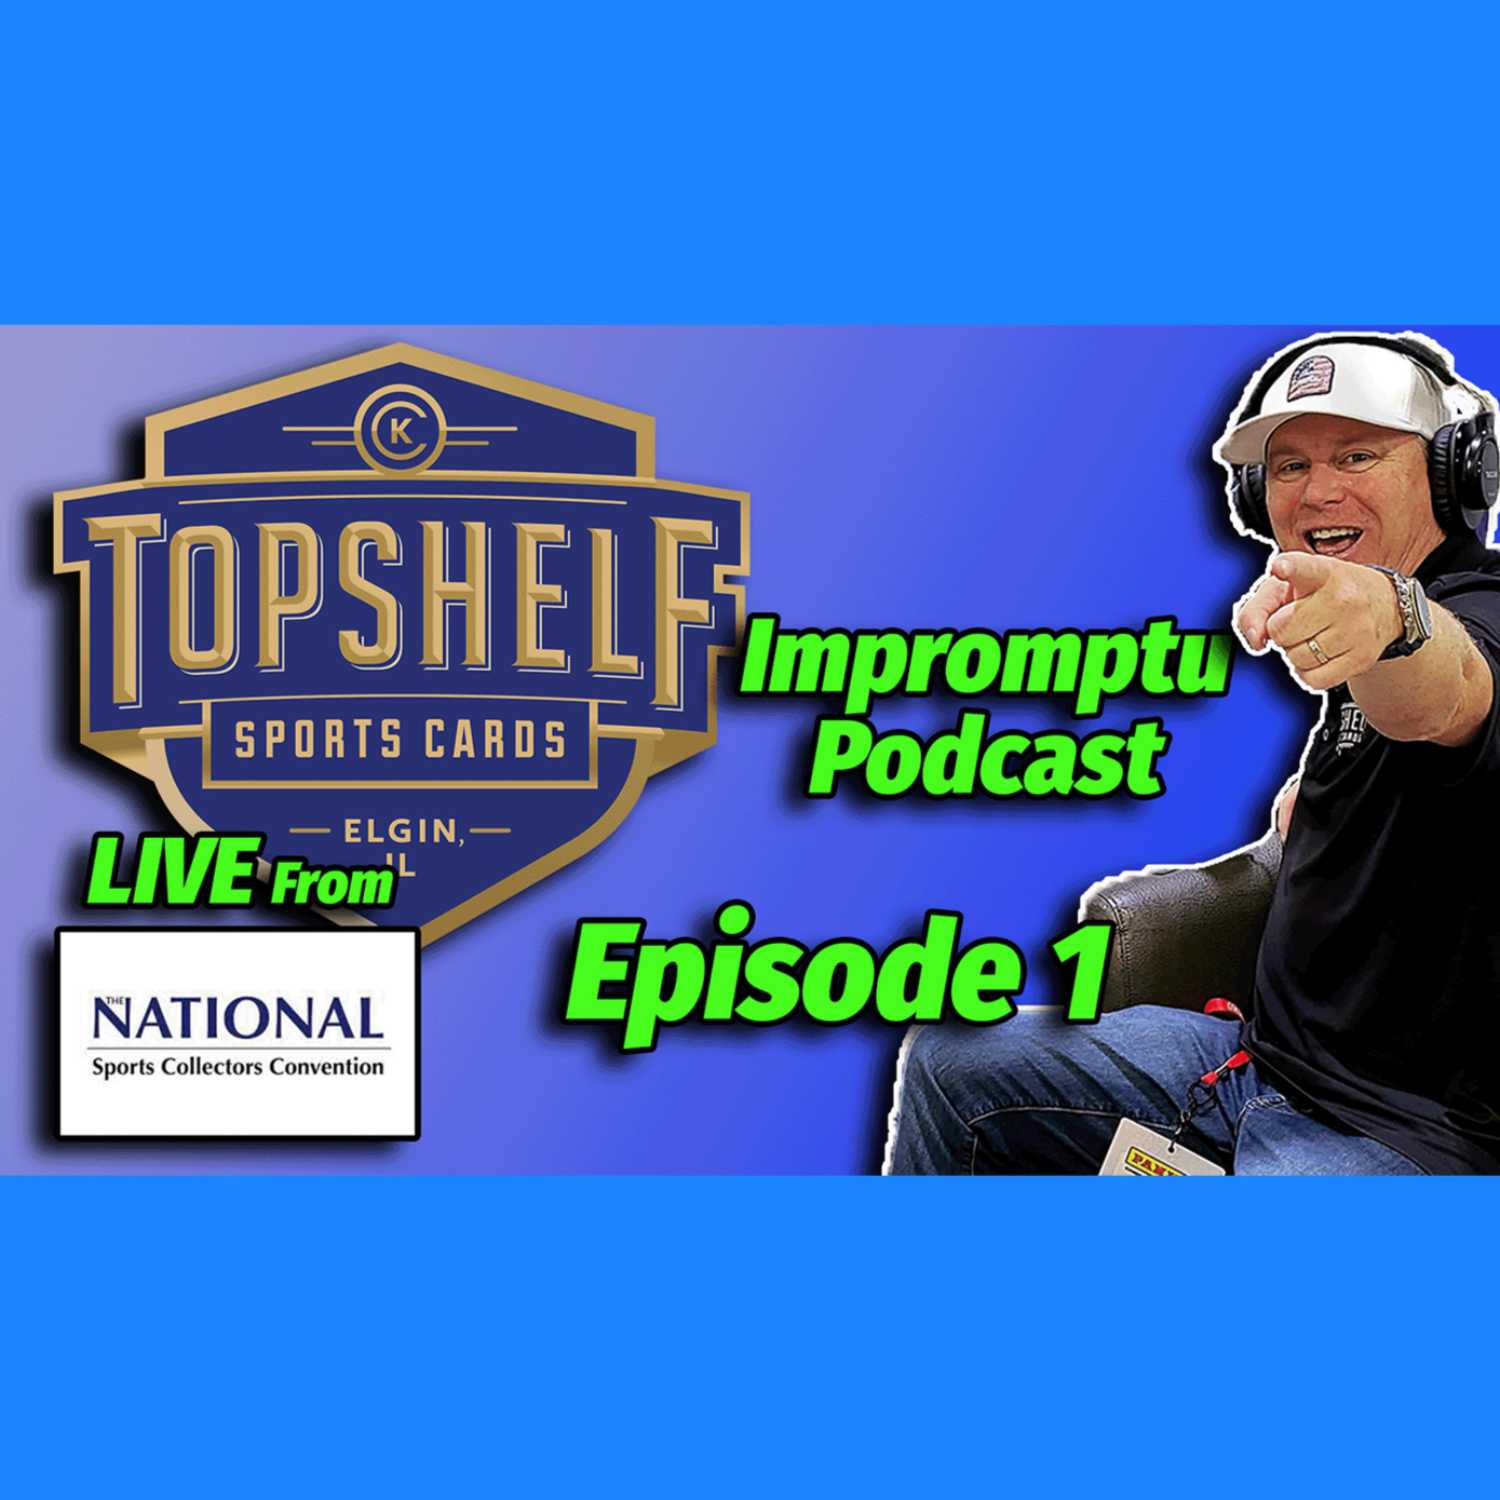 Top Shelf Sports Cards Impromptu Podcast Episode 1